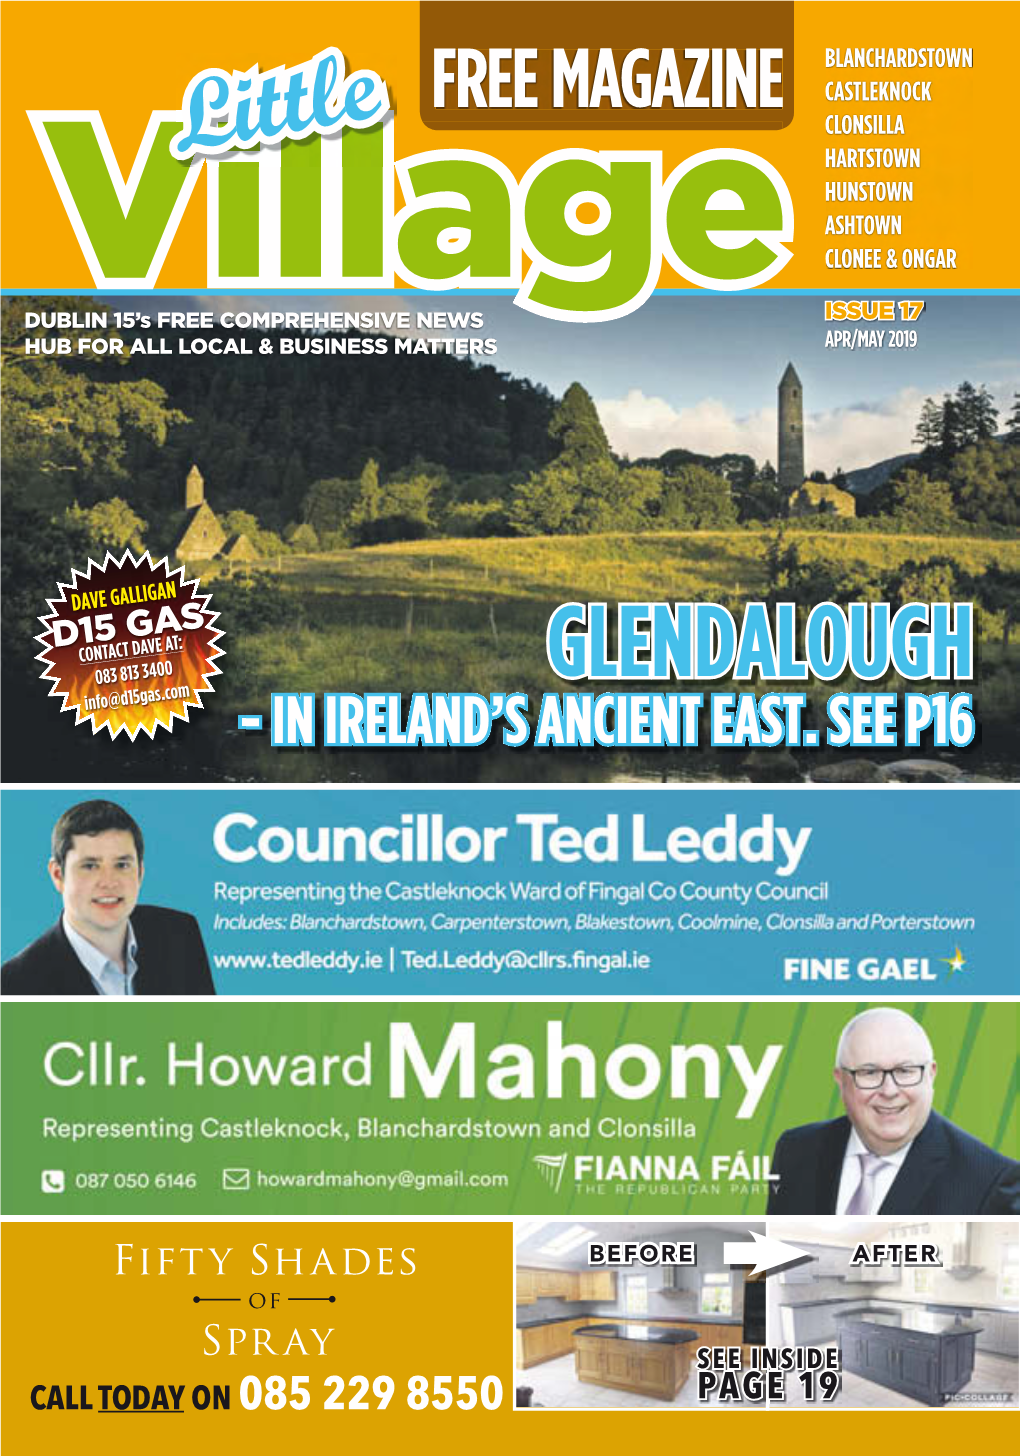 GLENDALOUGH Info@D15gas.Com - in IRELAND’S ANCIENT EAST